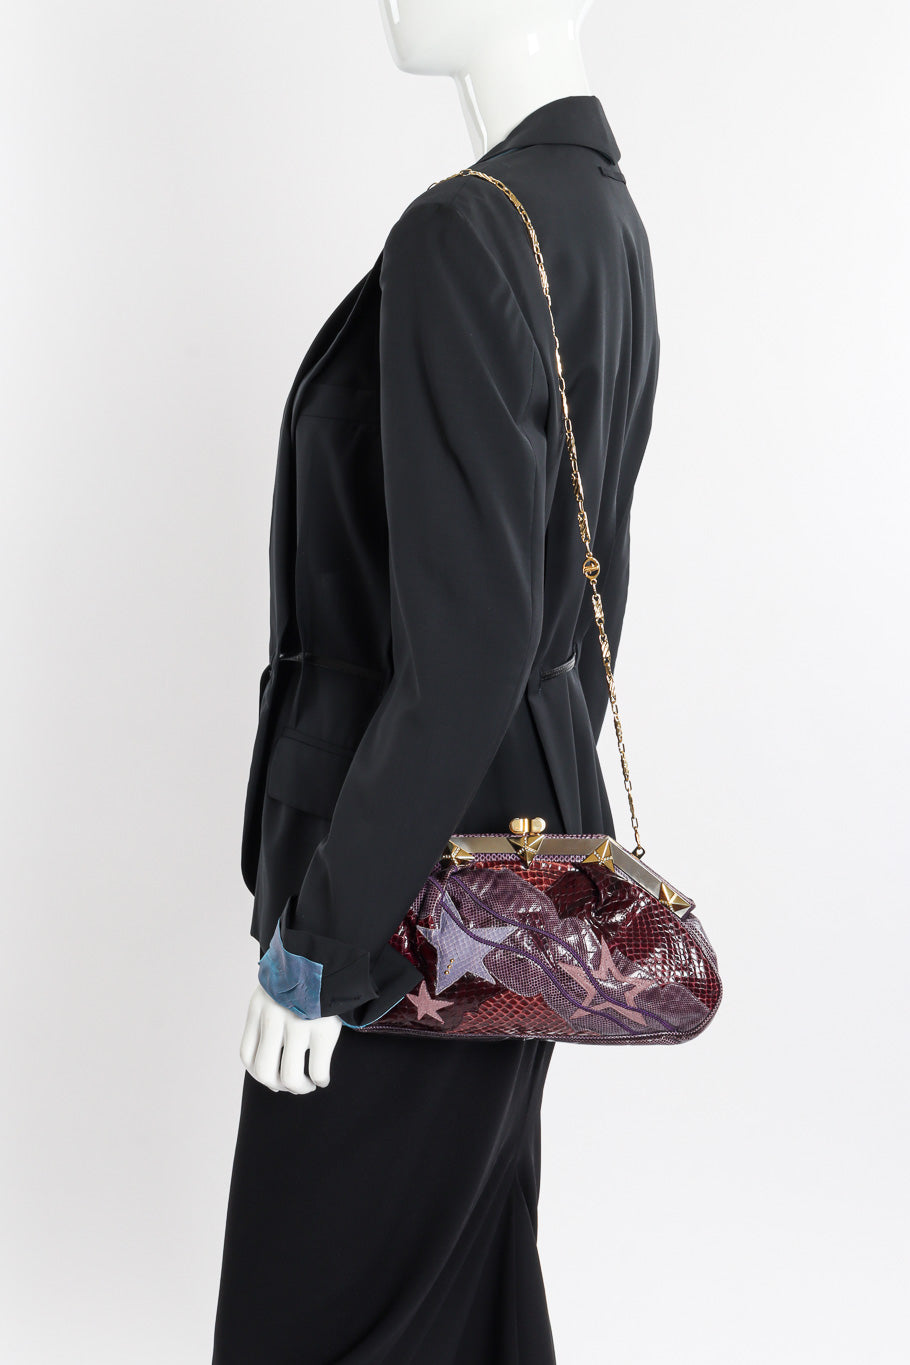 Snake & Lizard Star Collage Bag by Carlo Fiori on mannequin in black blazer  @recessla